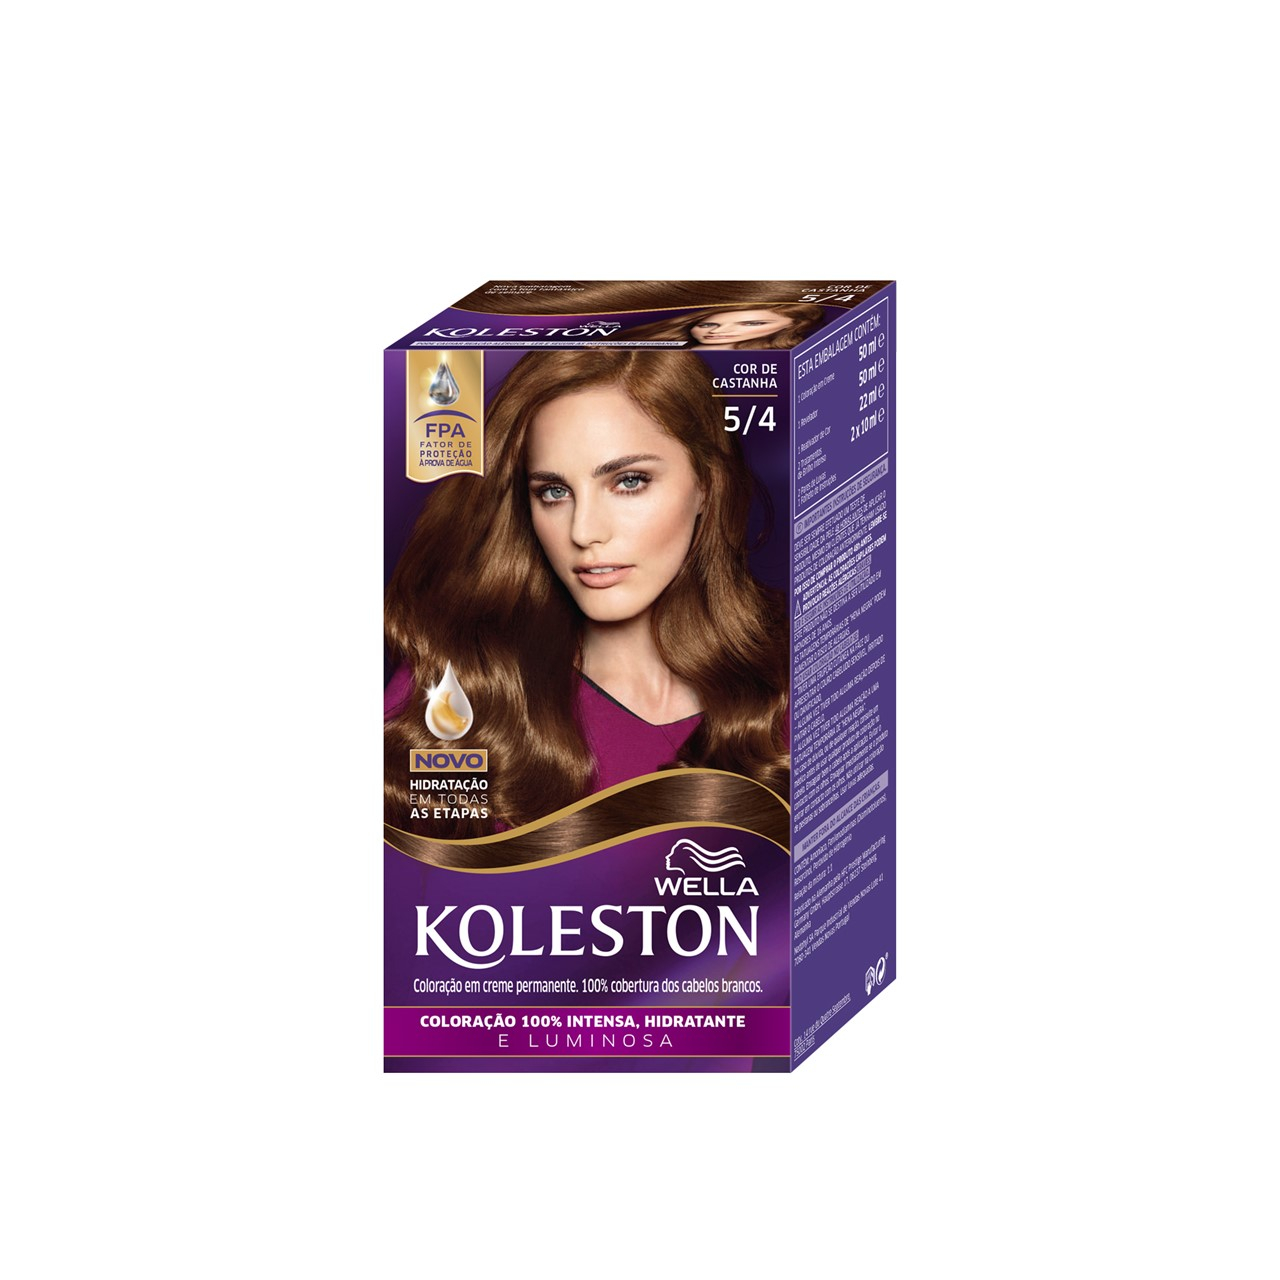 Wella Koleston 5/4 Chestnut Permanent Hair Color